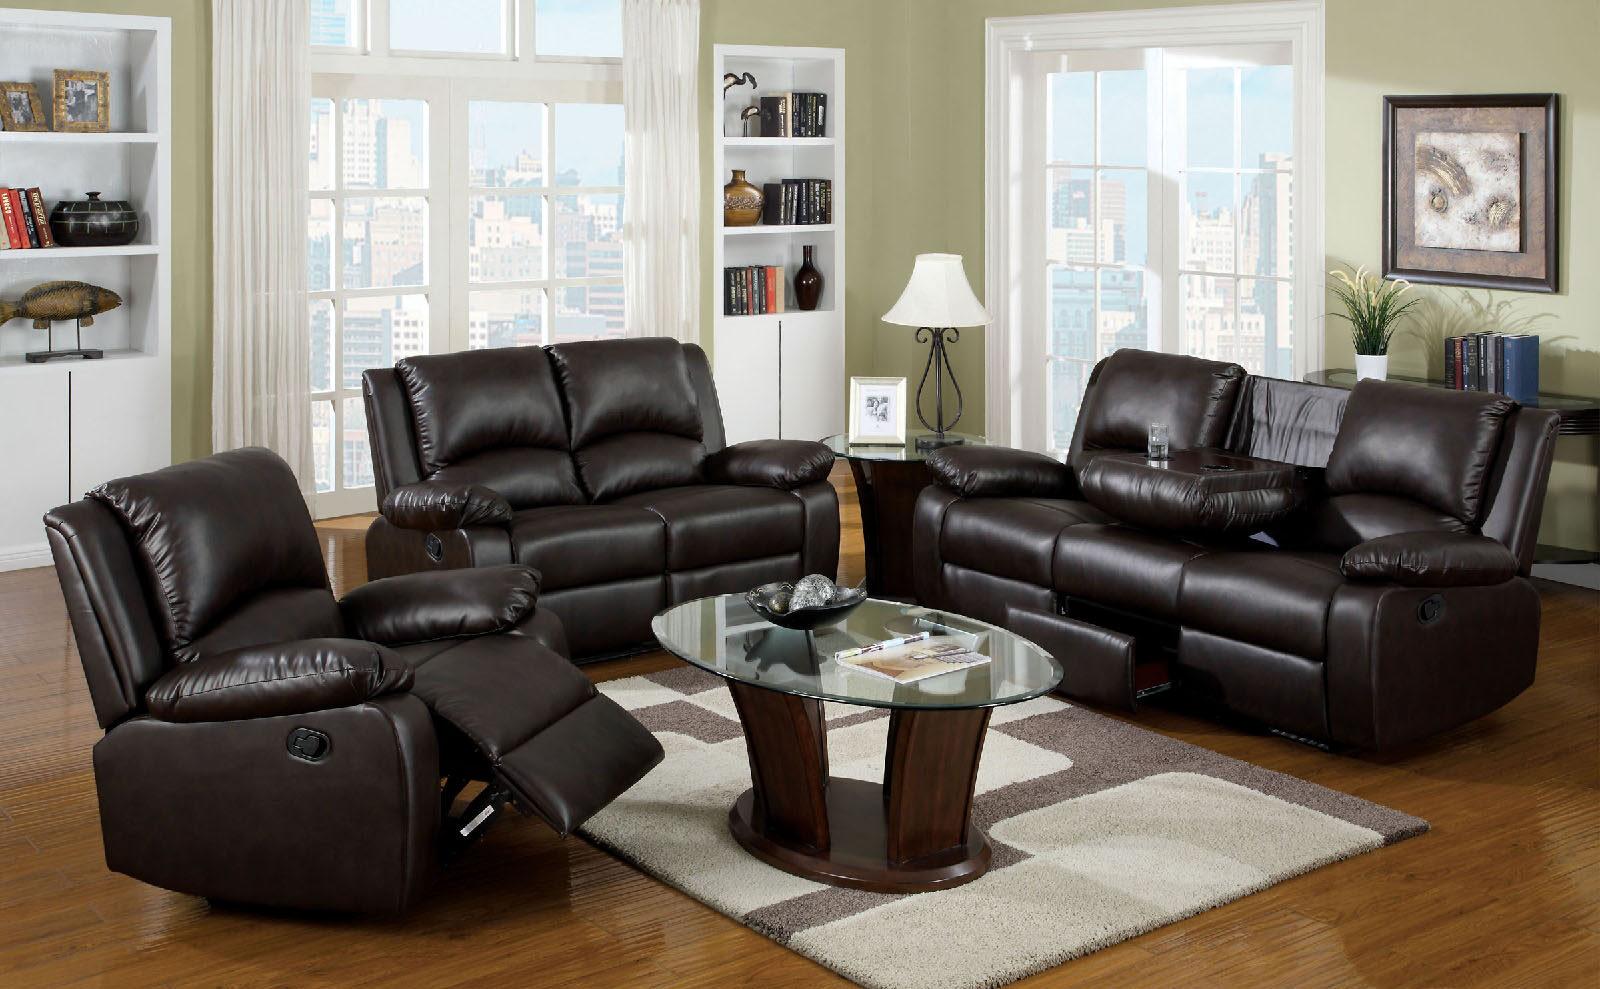 

    
Transitional Rustic Dark Brown Leatherette Recliner Living Room Set 2pcs Furniture of America Oxford
